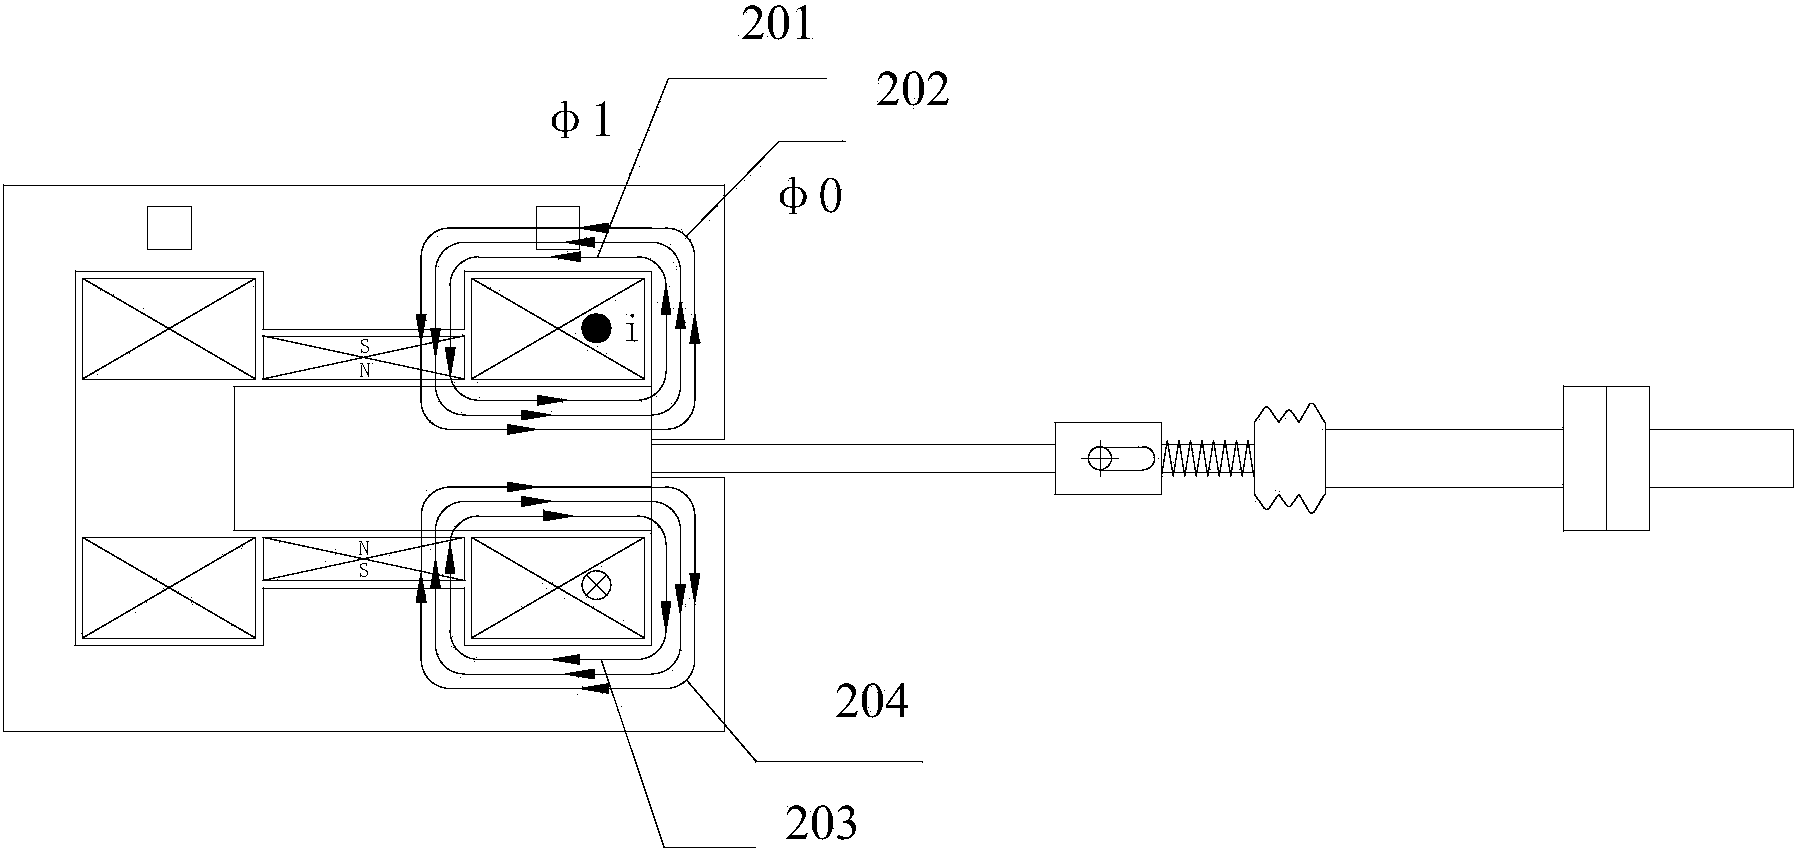 Integrated permanent magnet mechanism vacuum switch